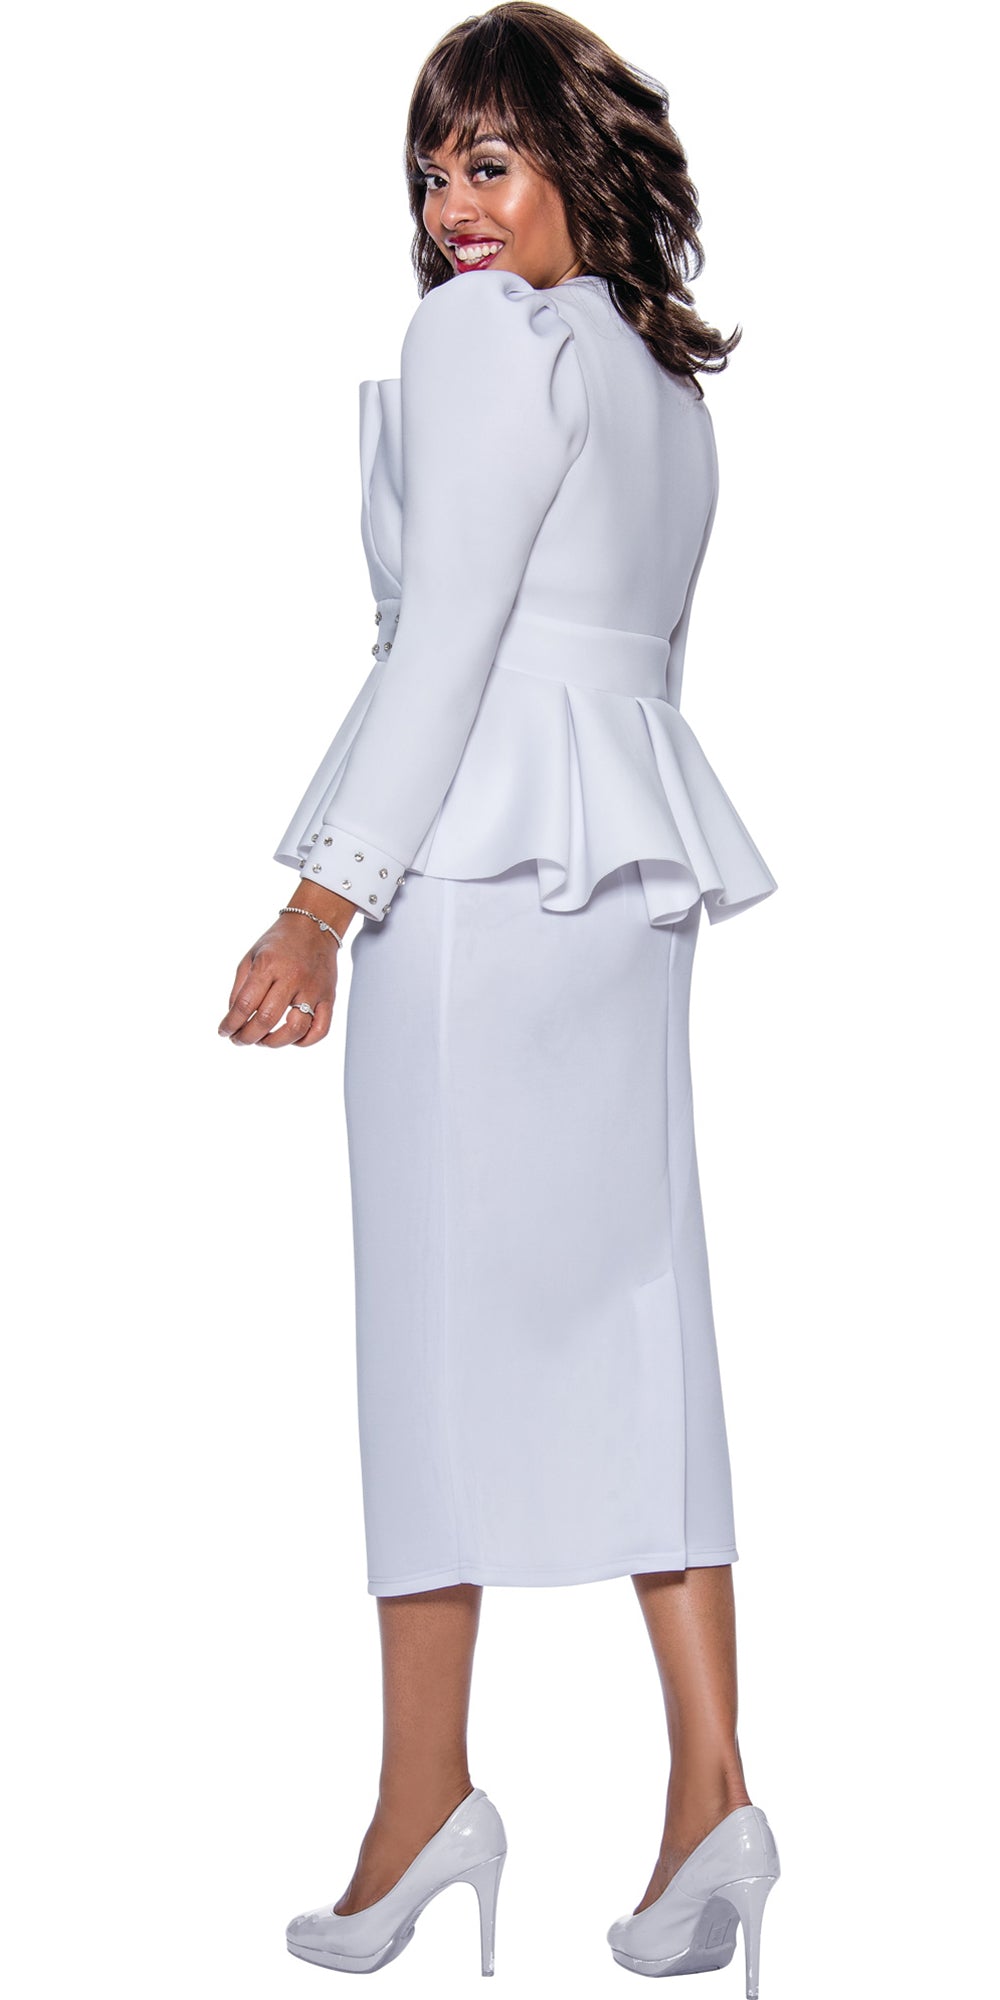 Stellar Looks SL1262 - White - Embellished 2pc Skirt Suit